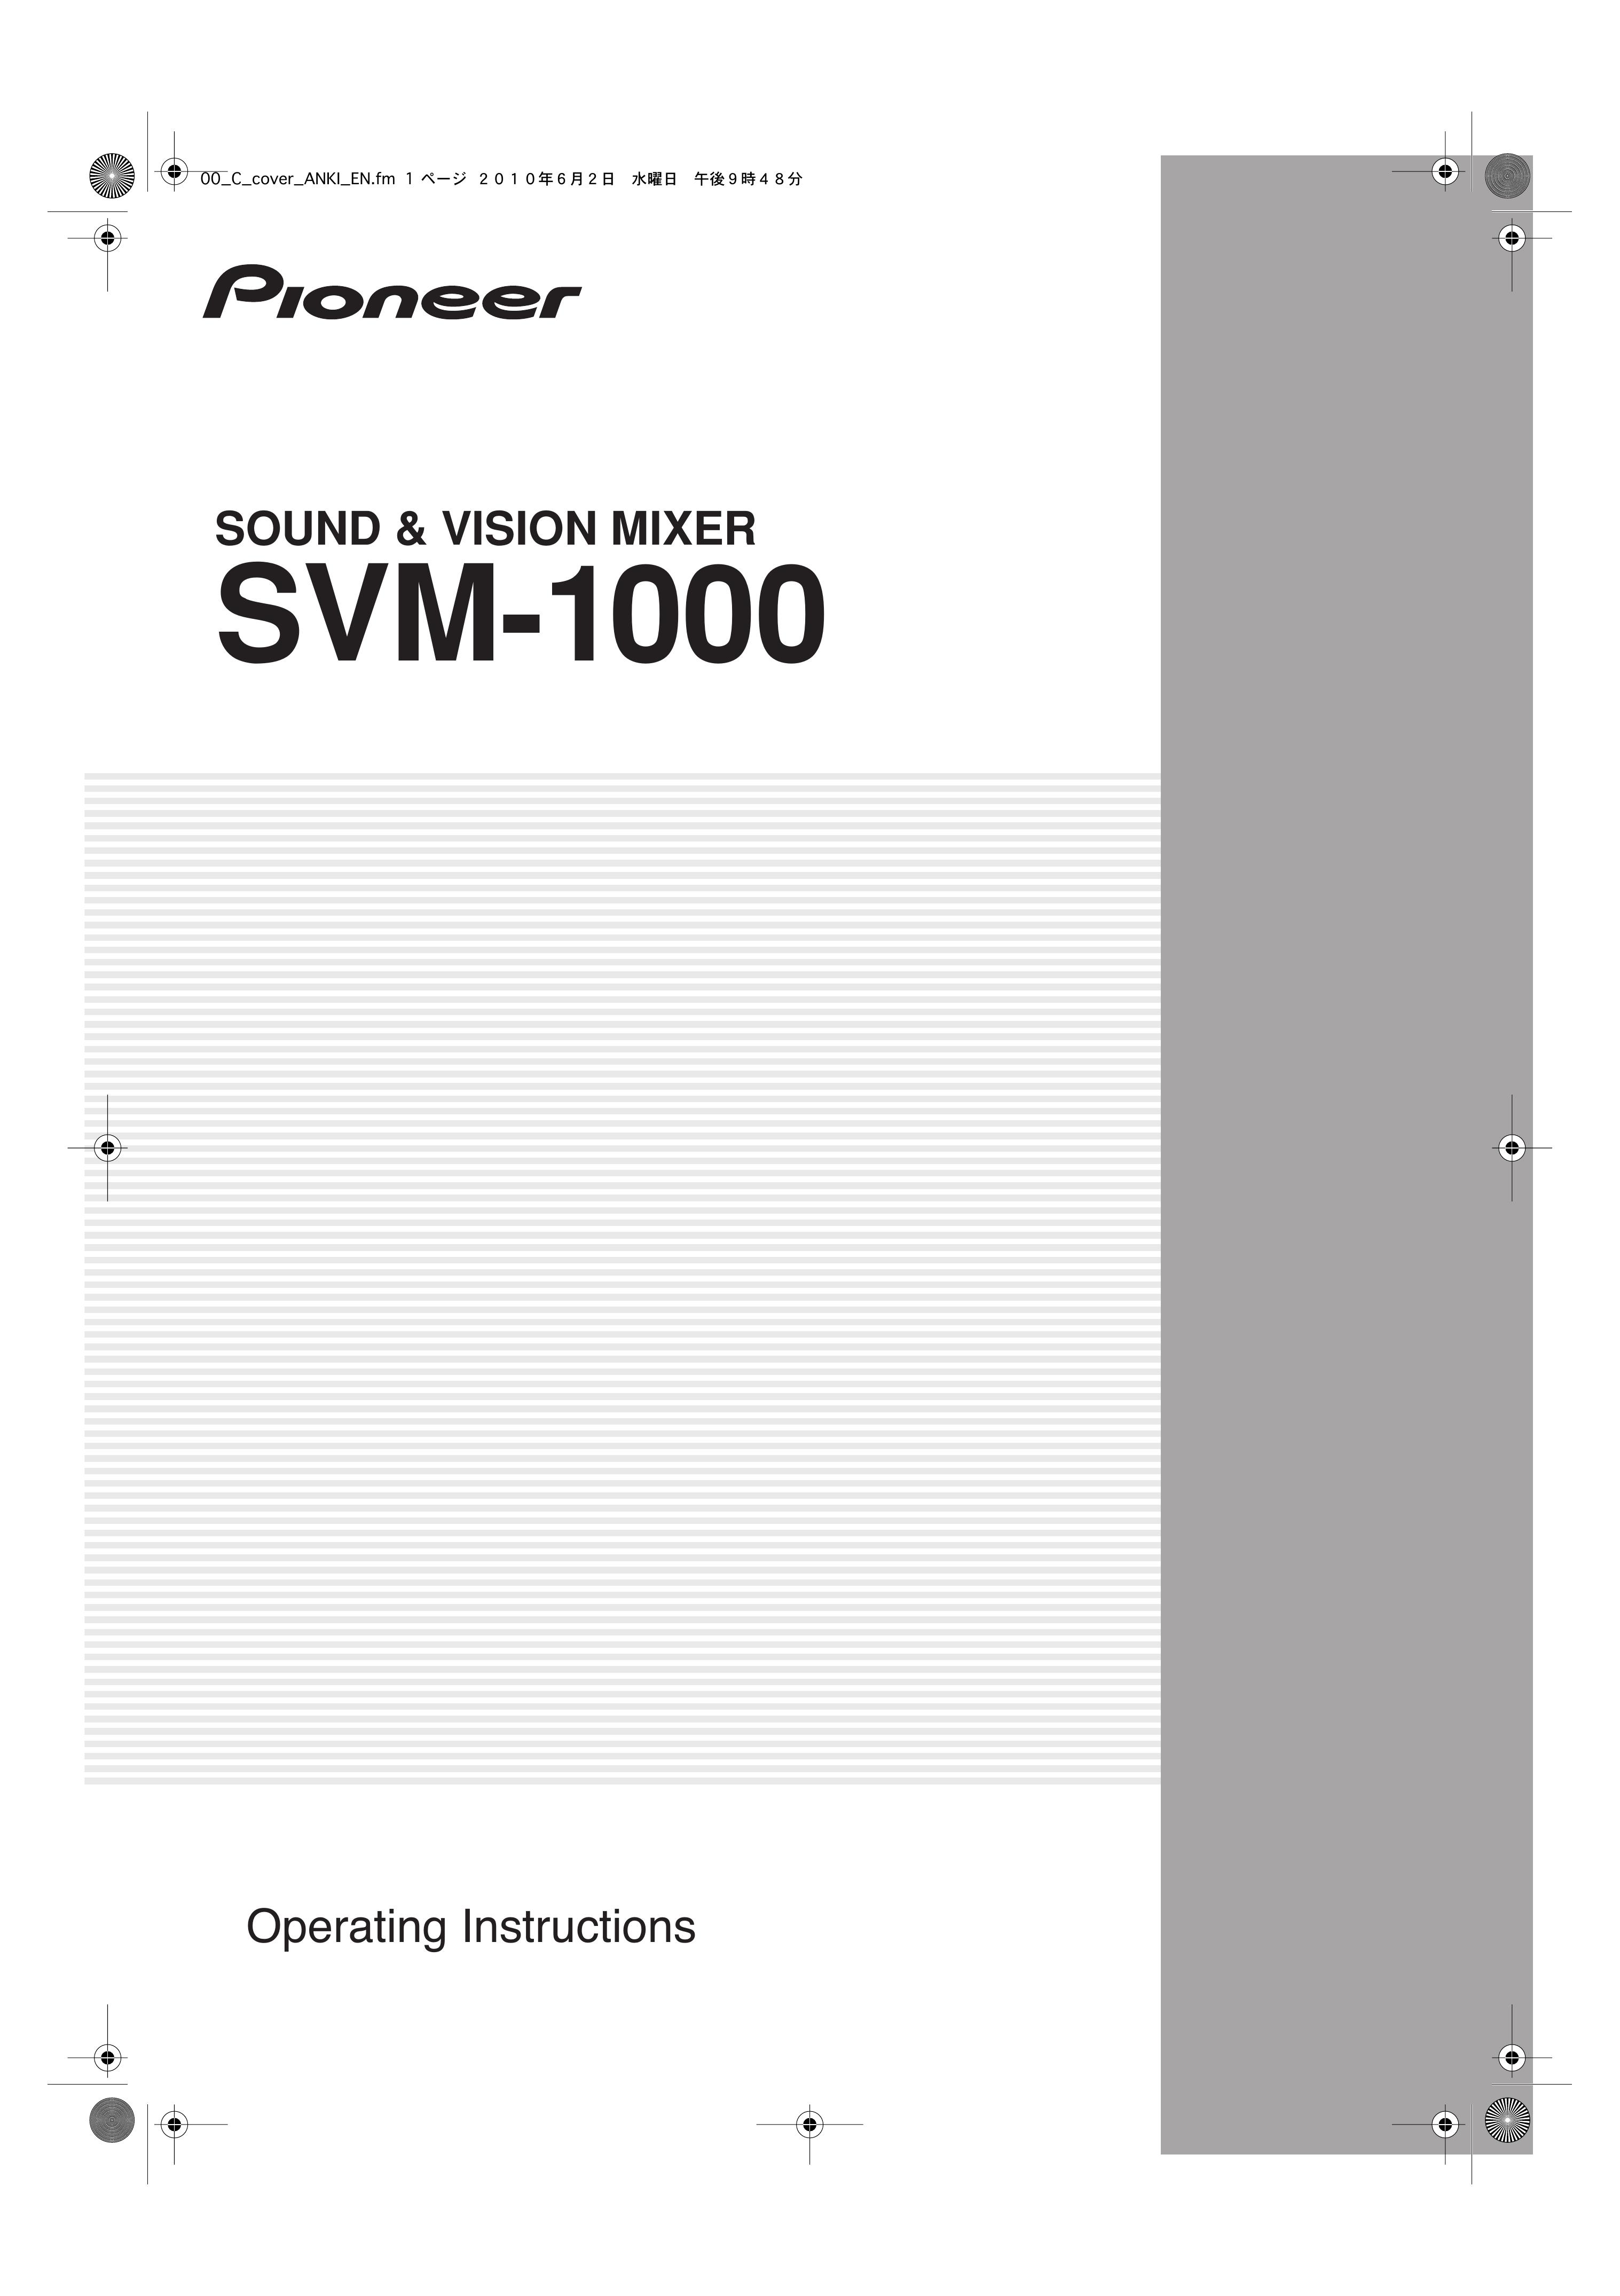 Pioneer Pioneer SOUND & VISION MIXER Music Mixer User Manual